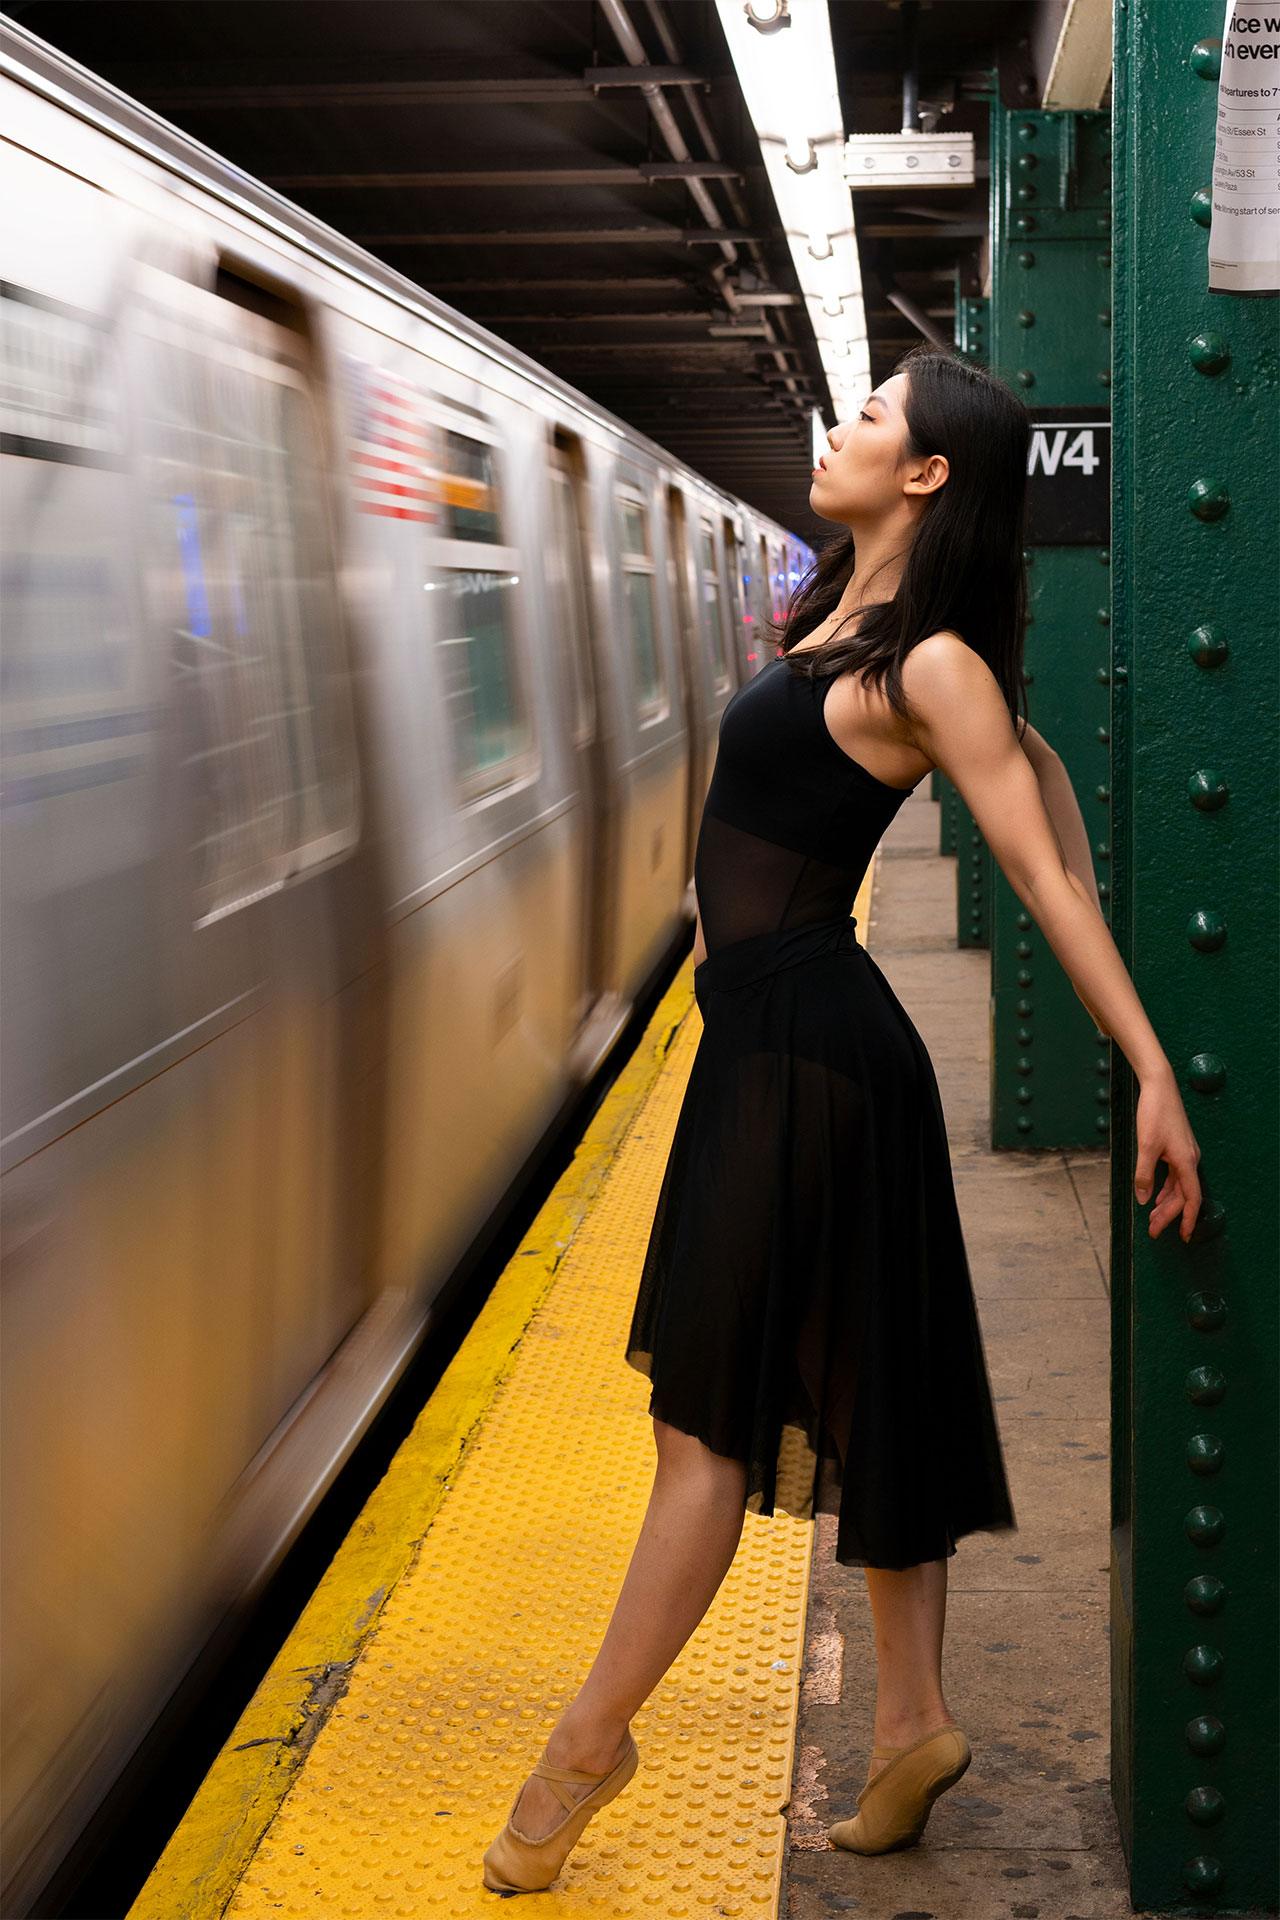 Dancer posing while subway car speeds past her.